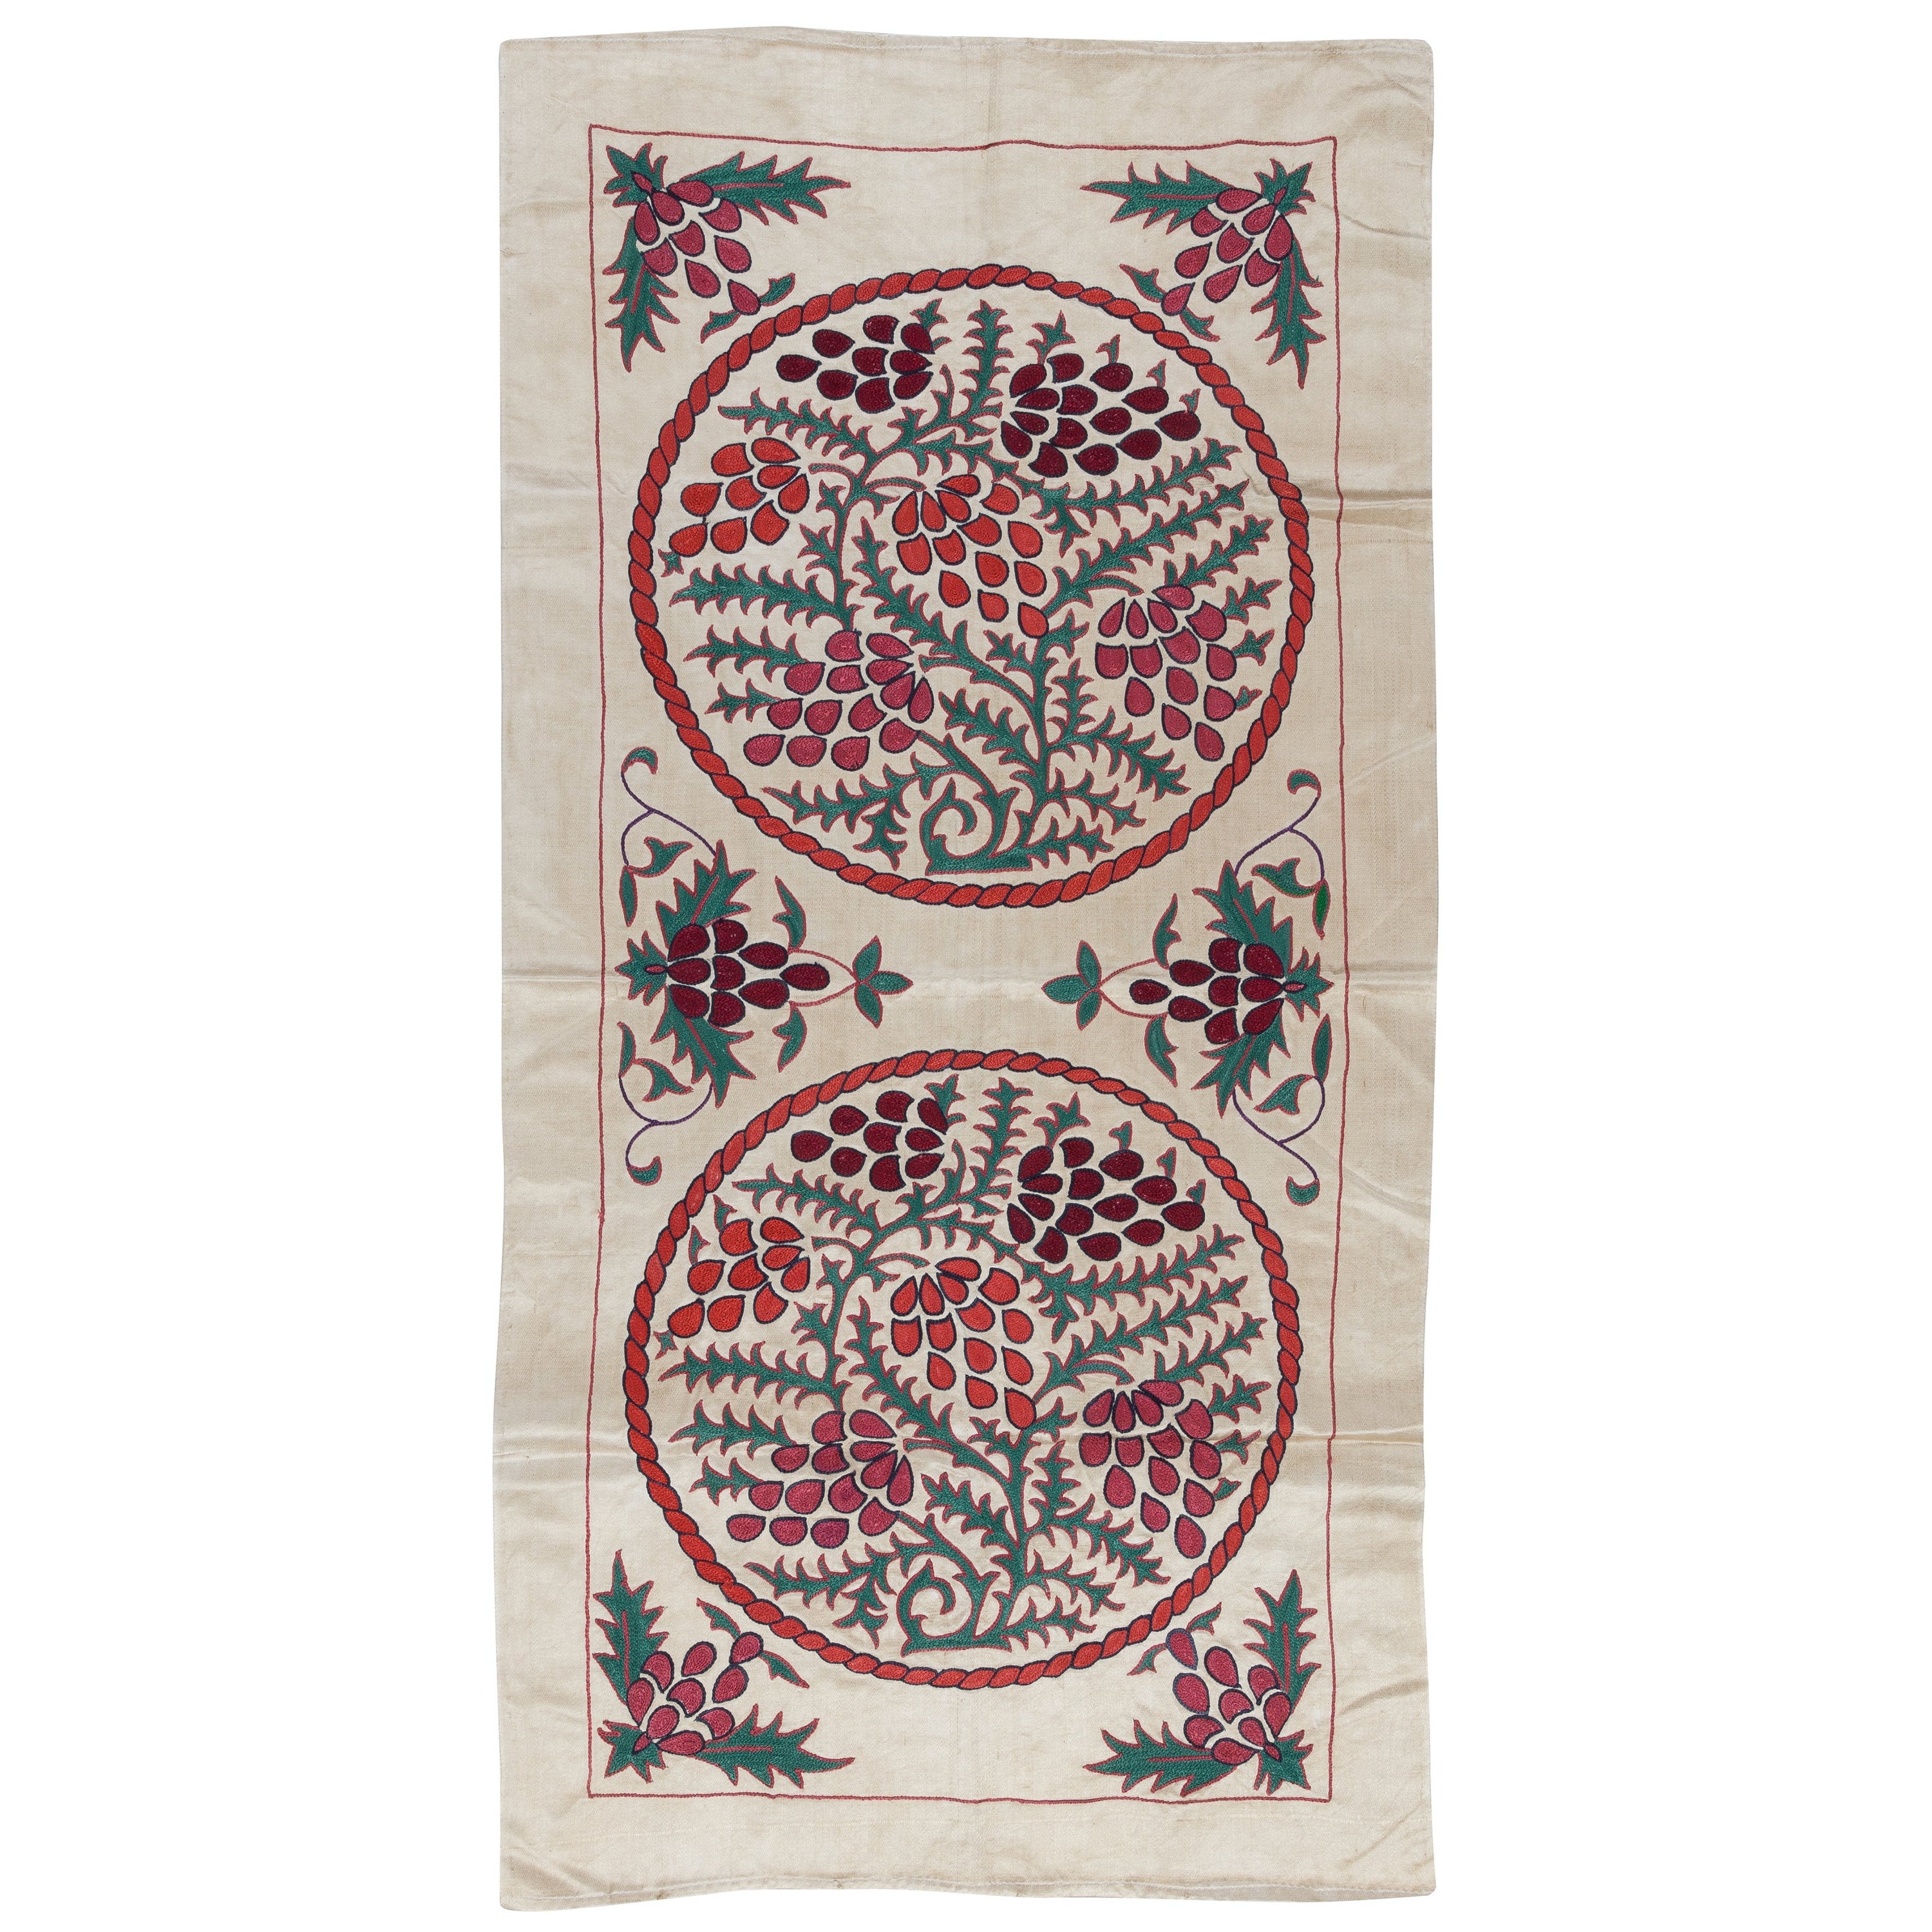 21"x42" Embroidered 100% Silk Wall Hanging, Suzani Wall Decor, Uzbek Tablecloth